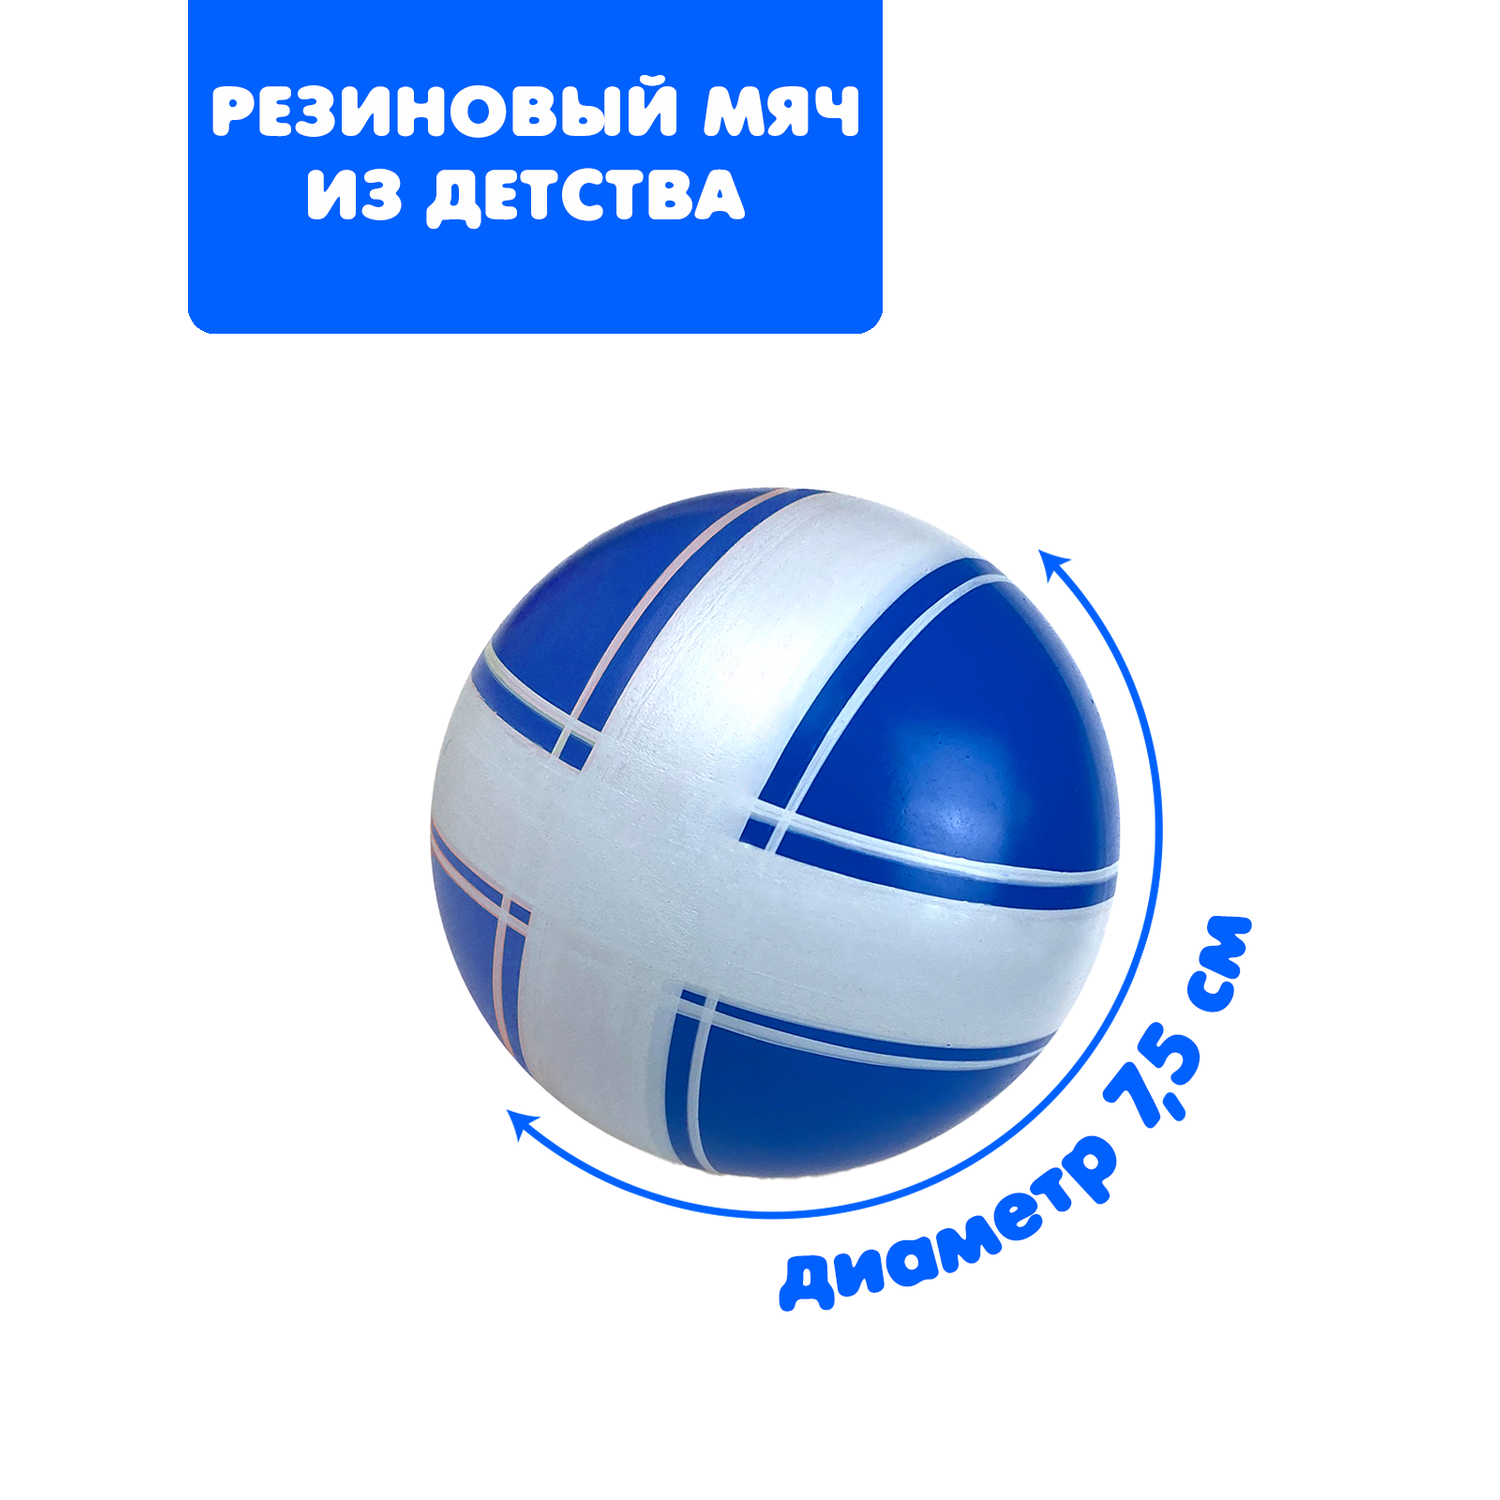 Мяч ЧАПАЕВ диаметр 75 мм «Крестики нолики» синий - фото 1